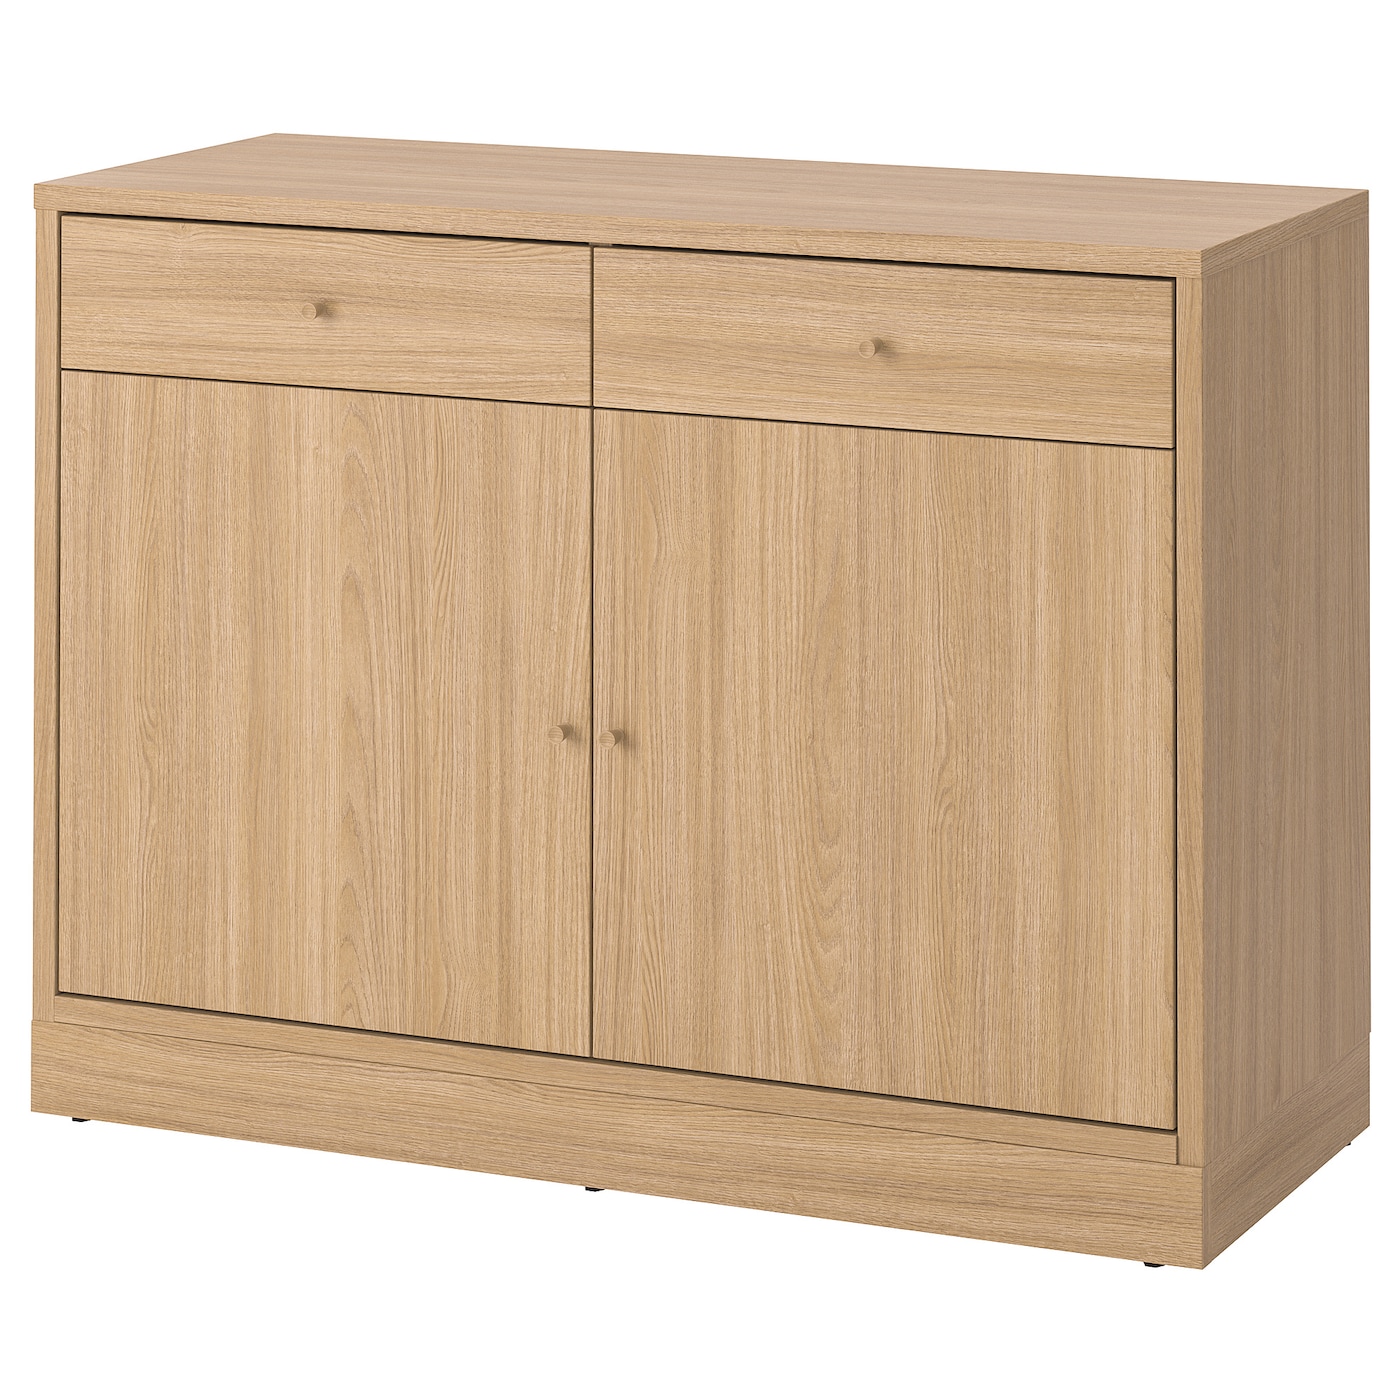 Шкаф - TONSTAD  IKEA/ ТОНСТАД  ИКЕА, 121x47x90 см, под беленый дуб